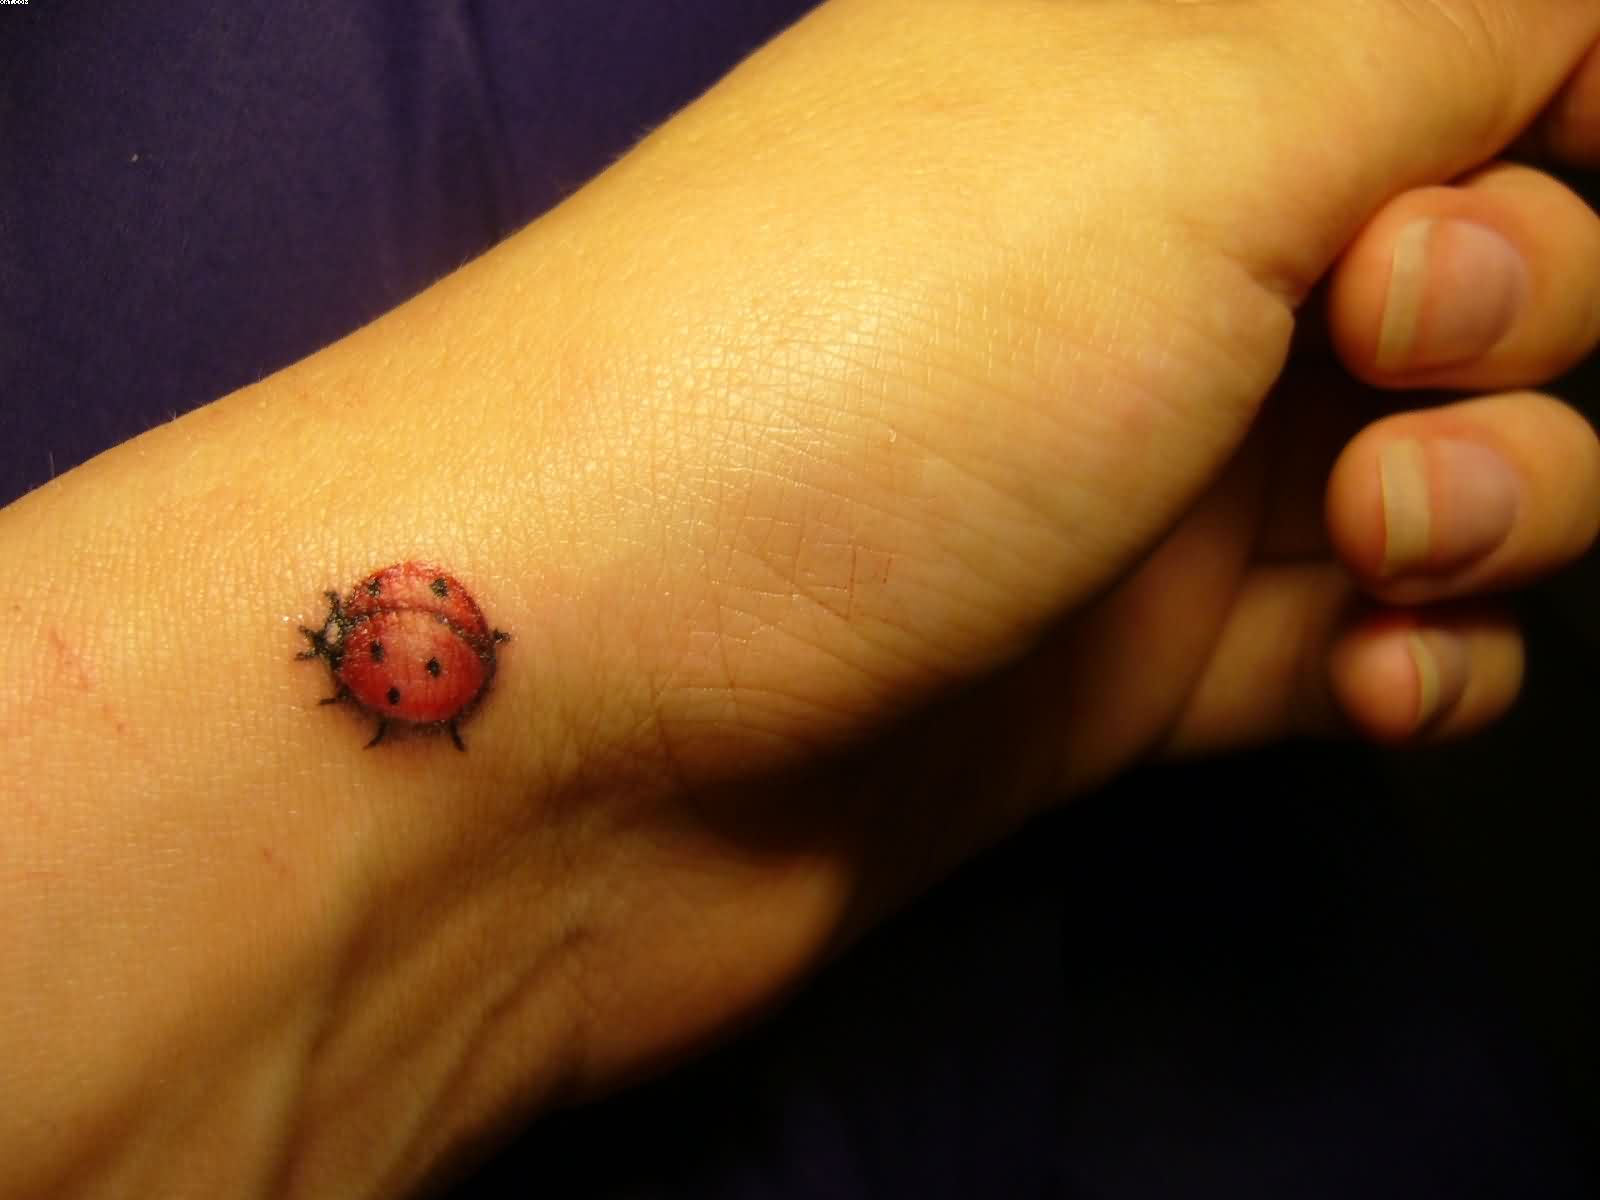 Realistic Small Ladybug Tattoo On Wrist